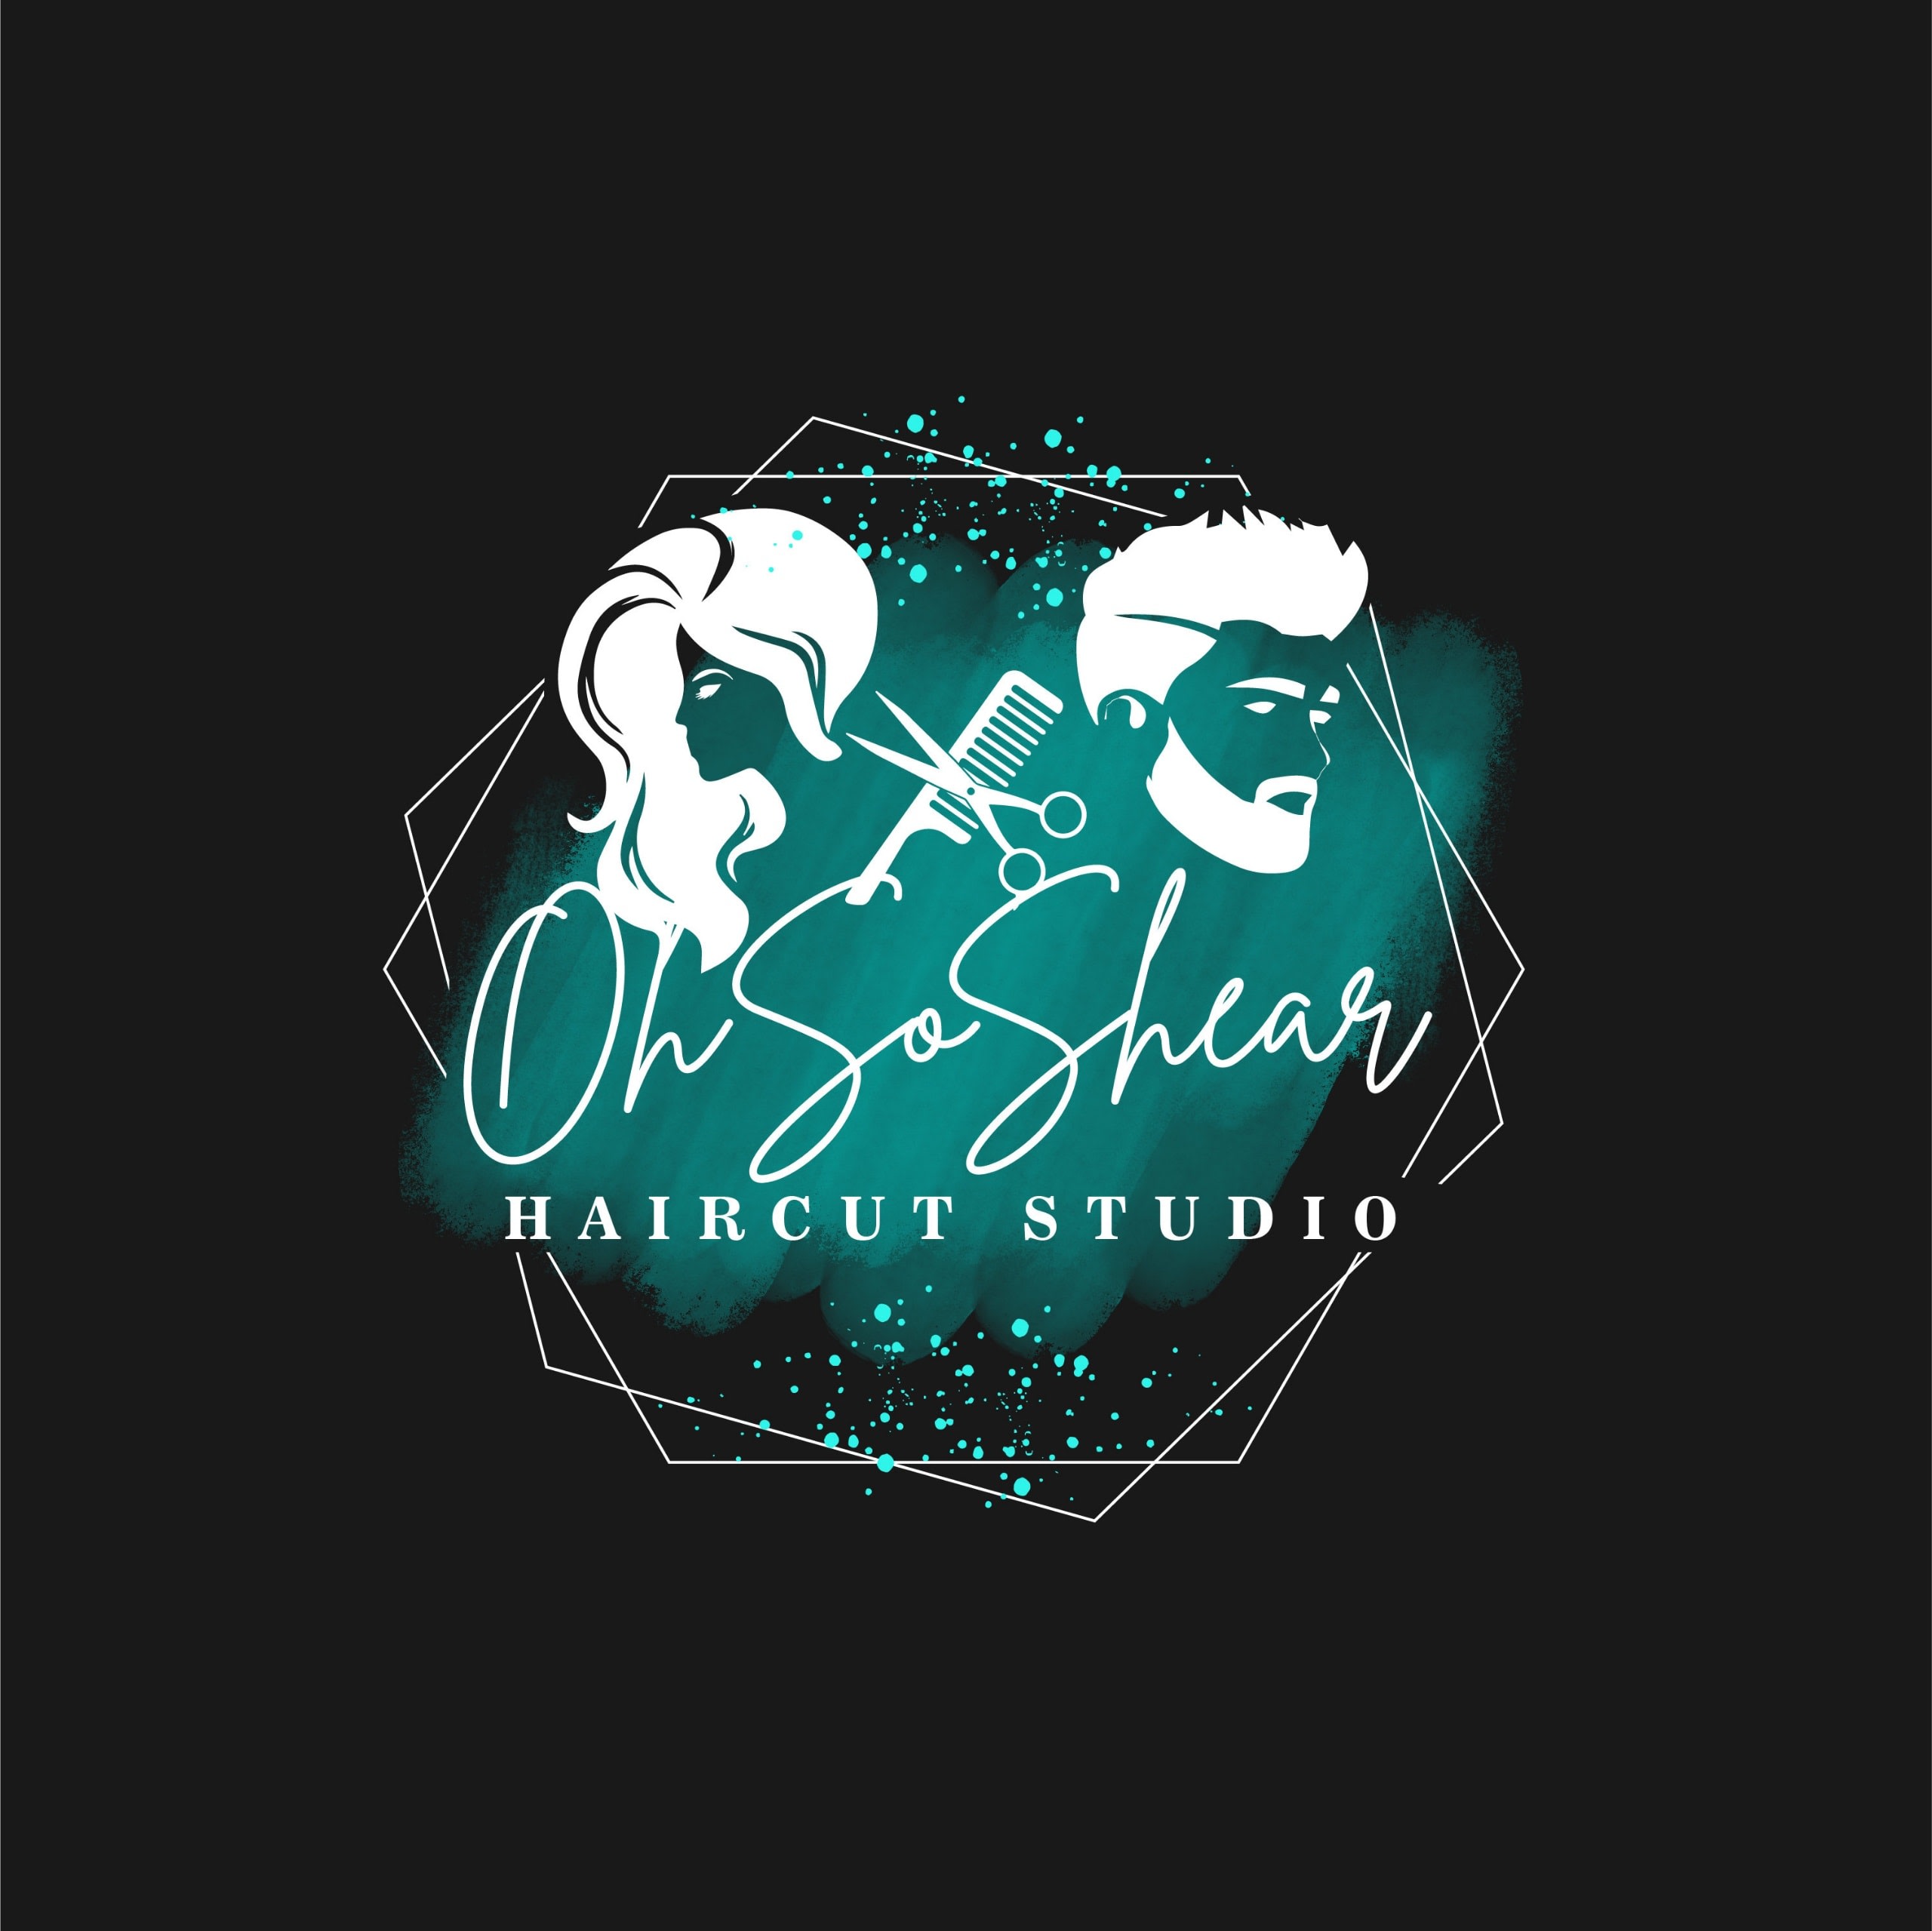 Oh So Shear Haircut Studio